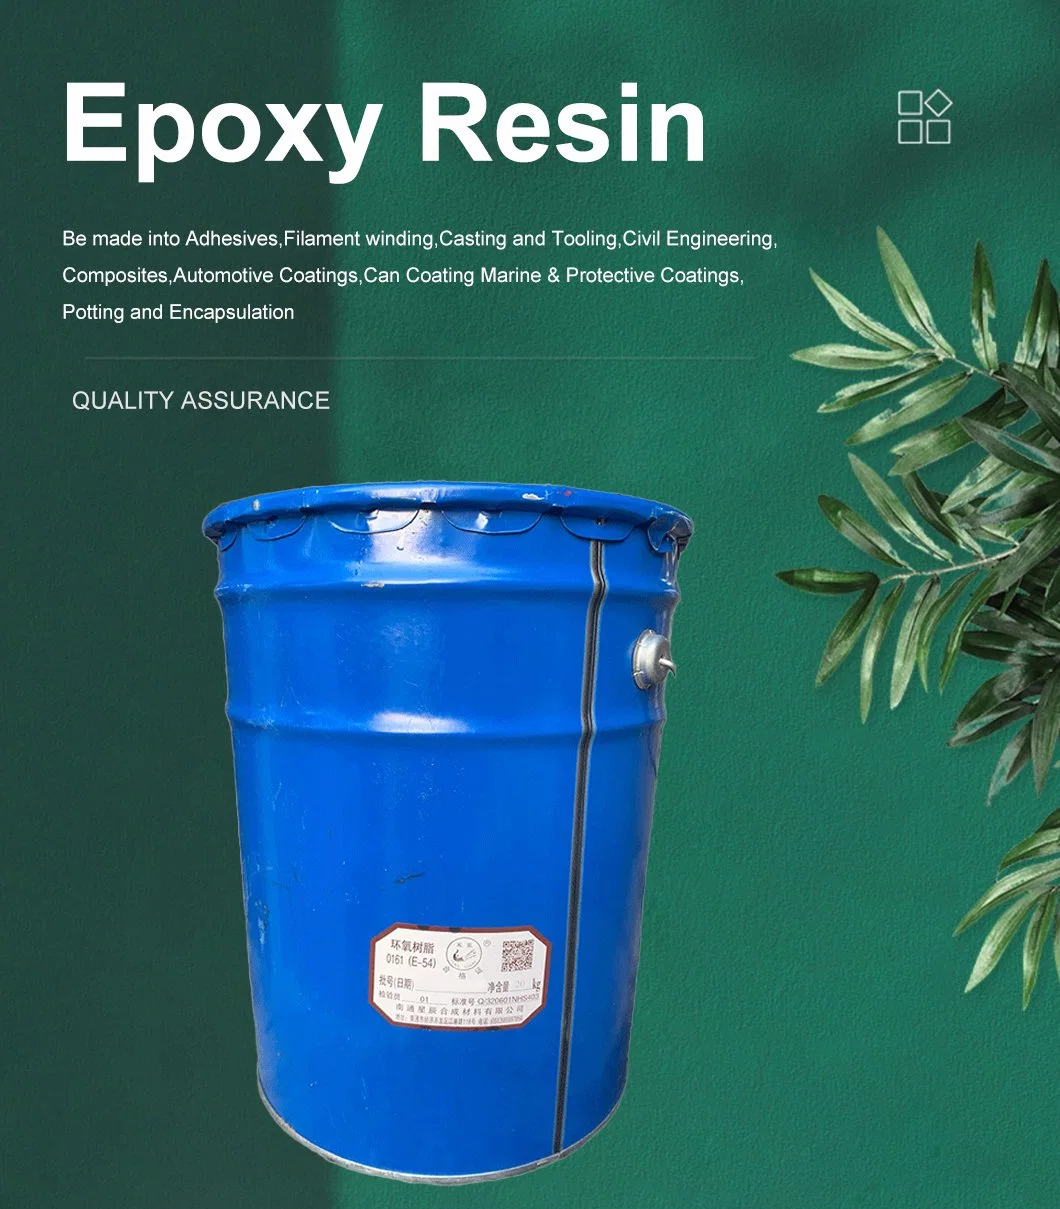 Phoenix Products 0161e-54liquid Epoxidharz BPA Epoxycholin für Klebstoff